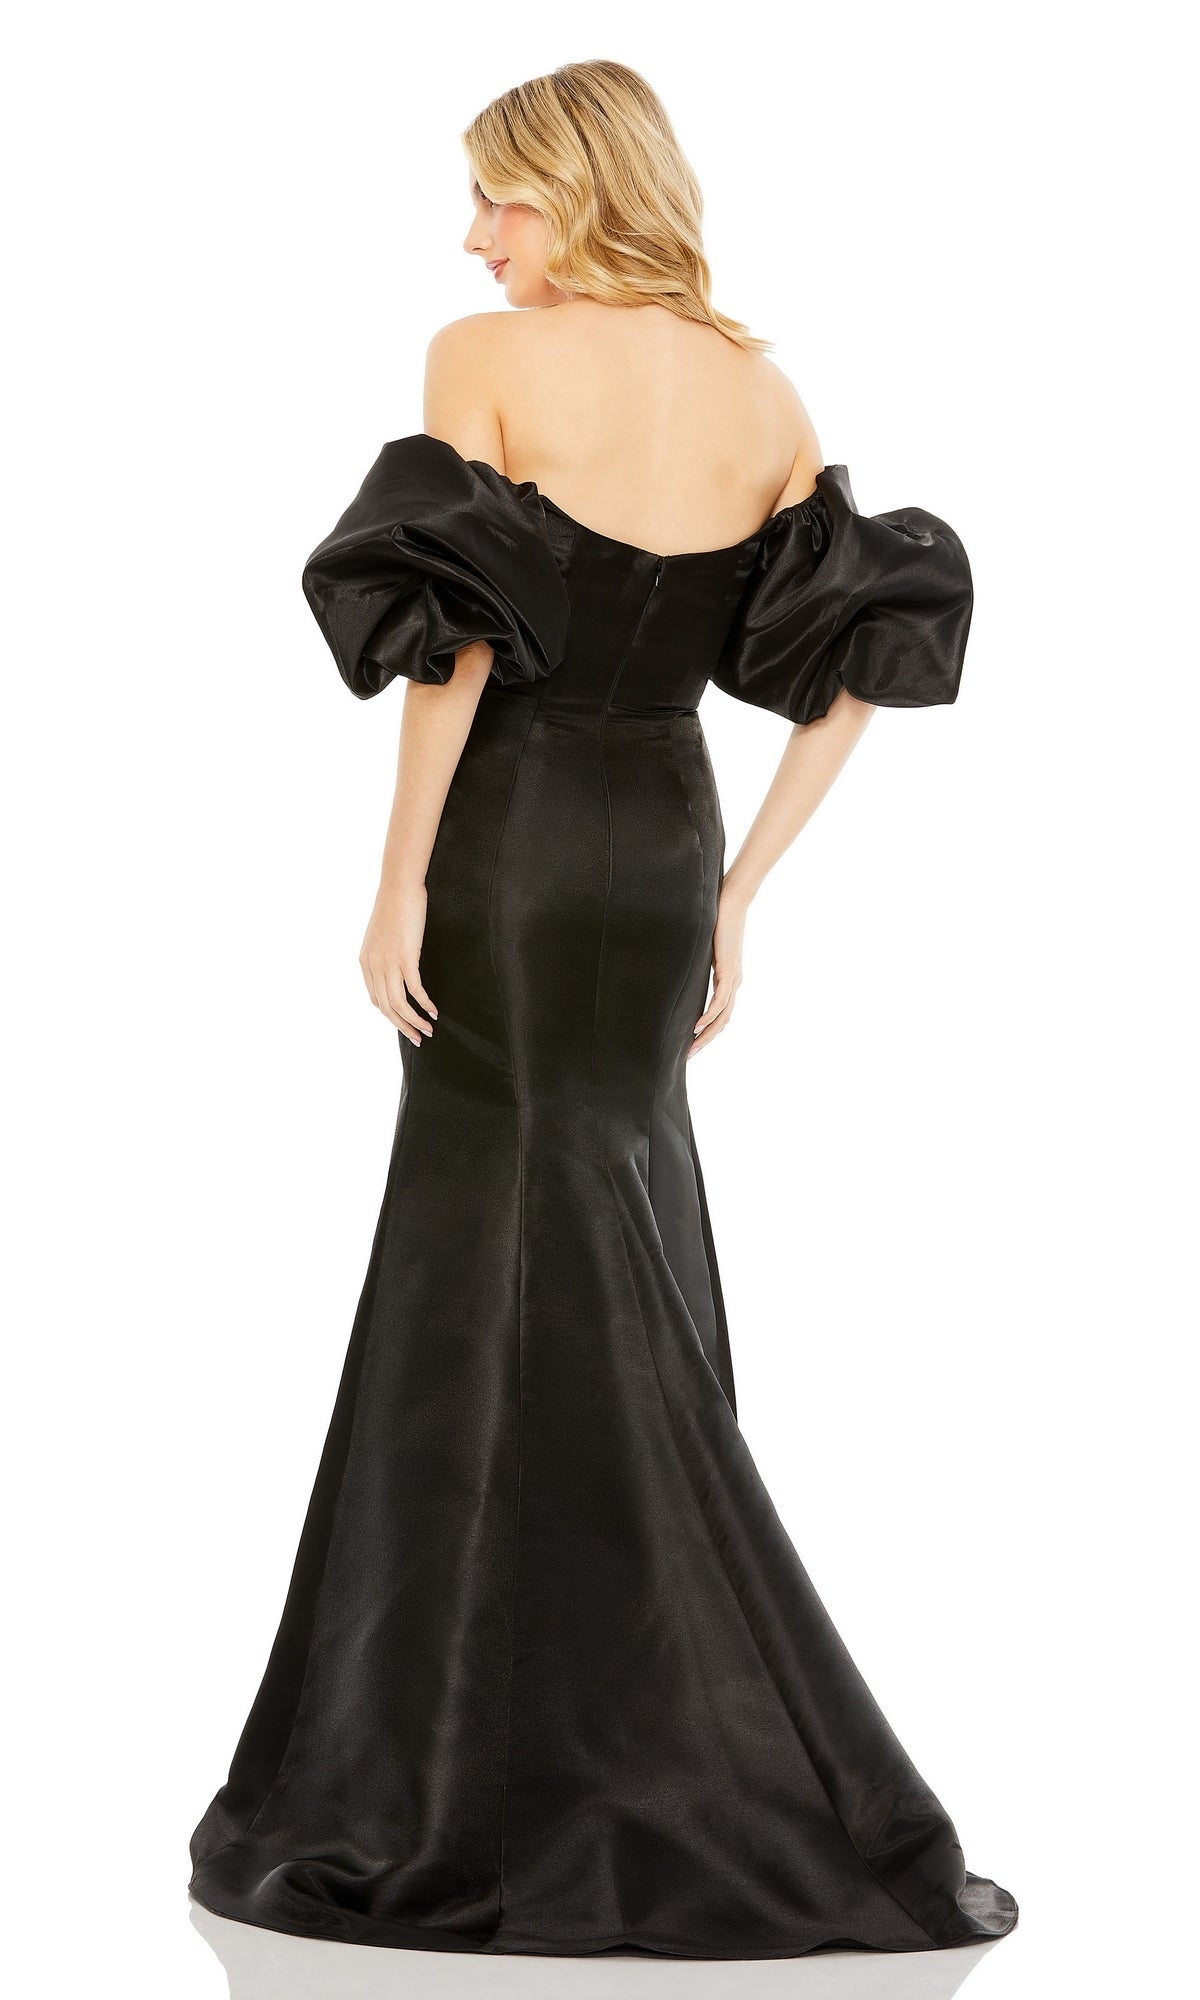 Long Formal Dress 50677 by Mac Duggal